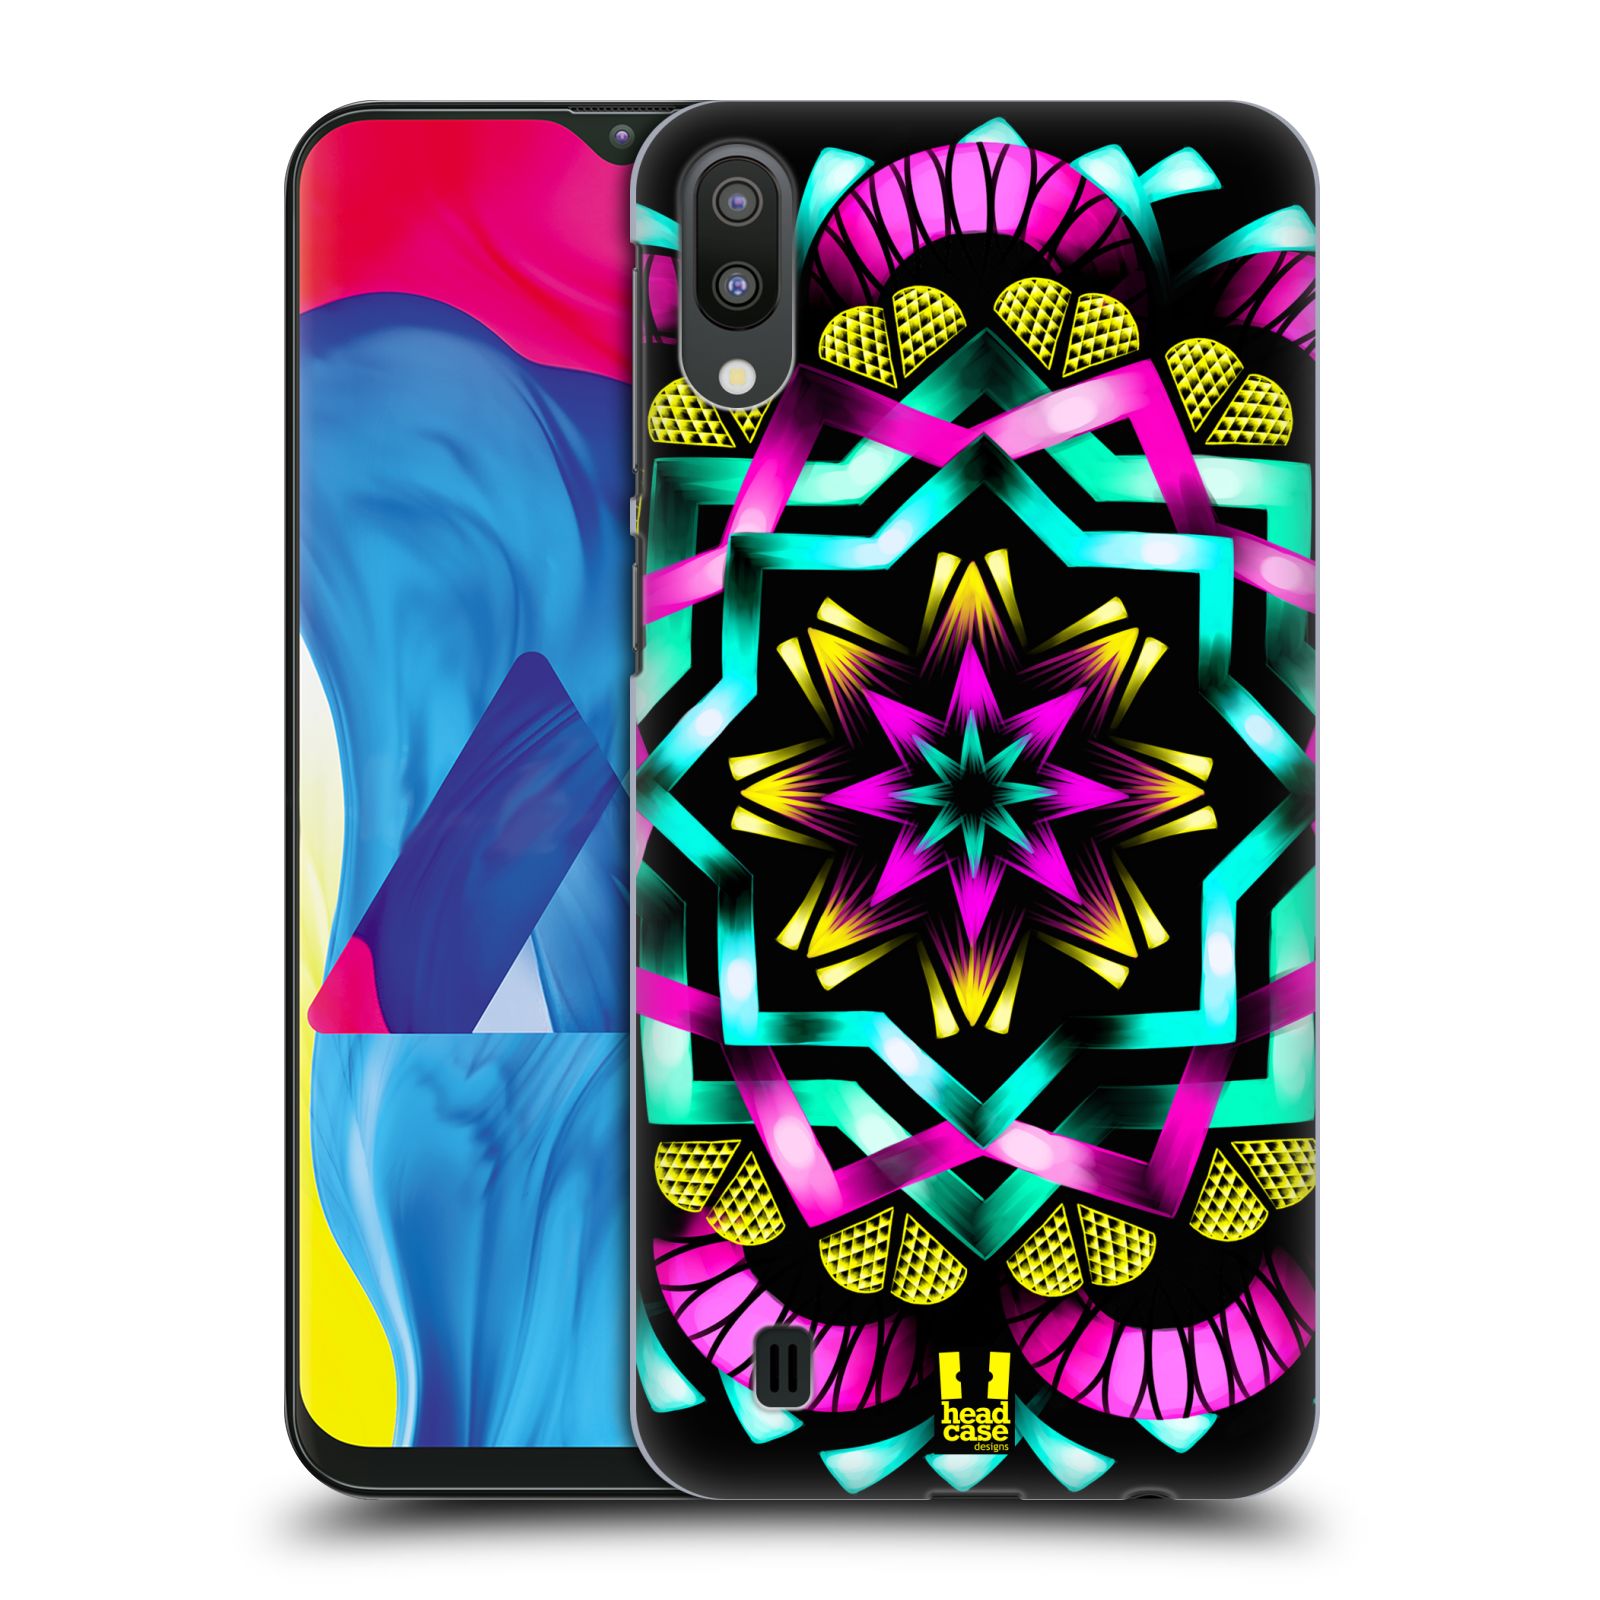 Plastový obal HEAD CASE na mobil Samsung Galaxy M10 vzor Indie Mandala kaleidoskop barevný vzor SLUNCE